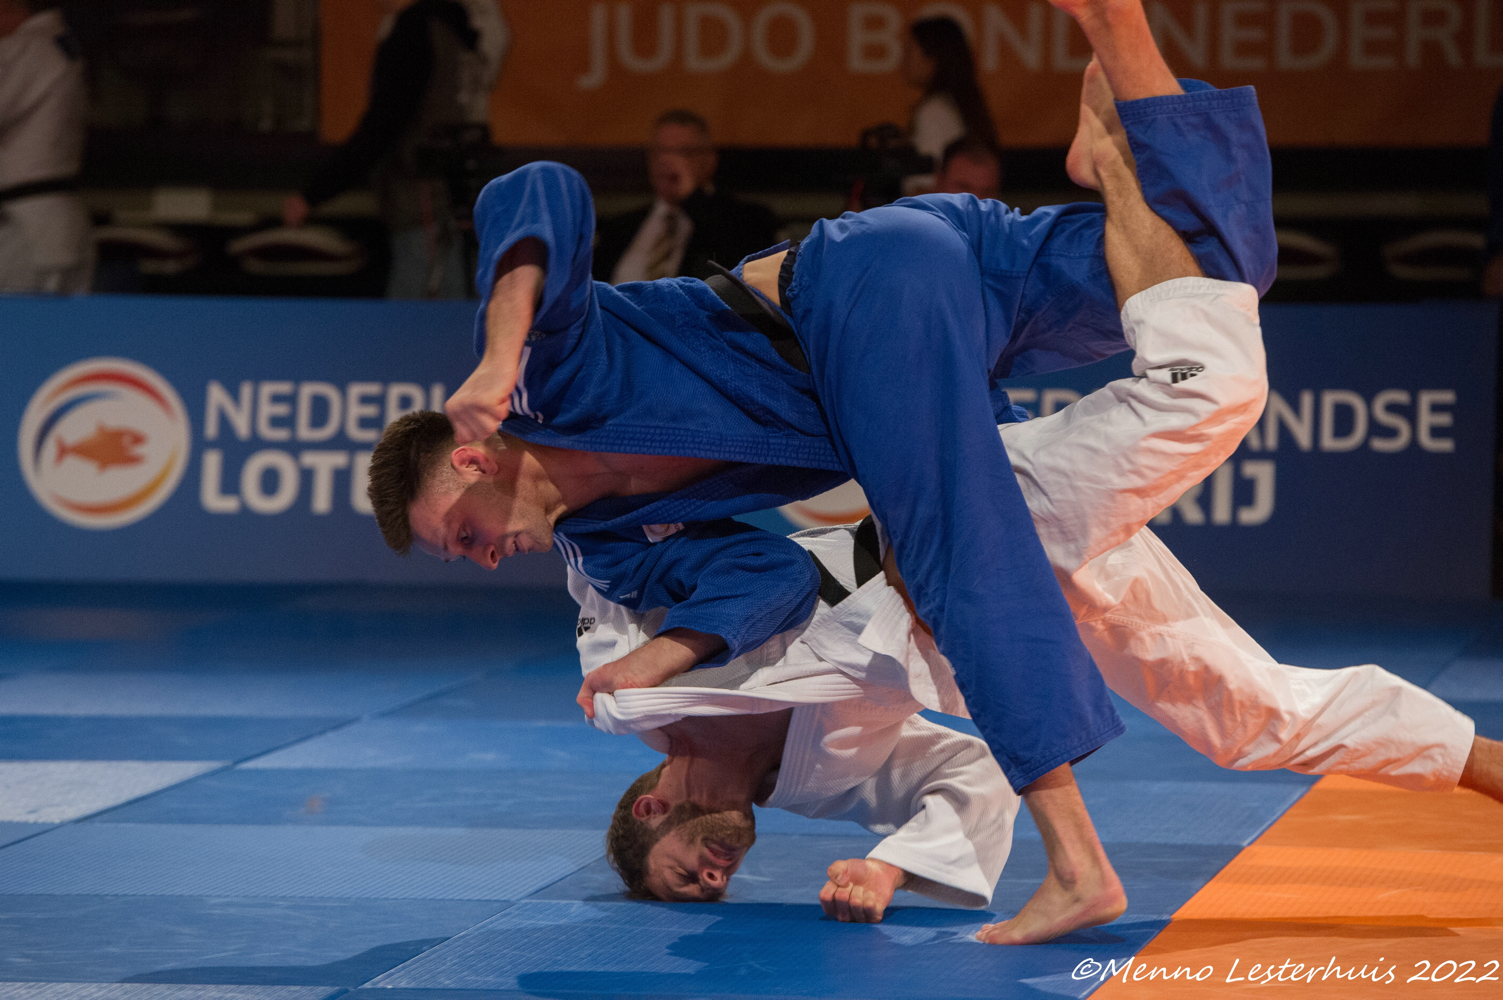 Foto’s NK judo zondag 23 oktober (Menno Lesterhuis)